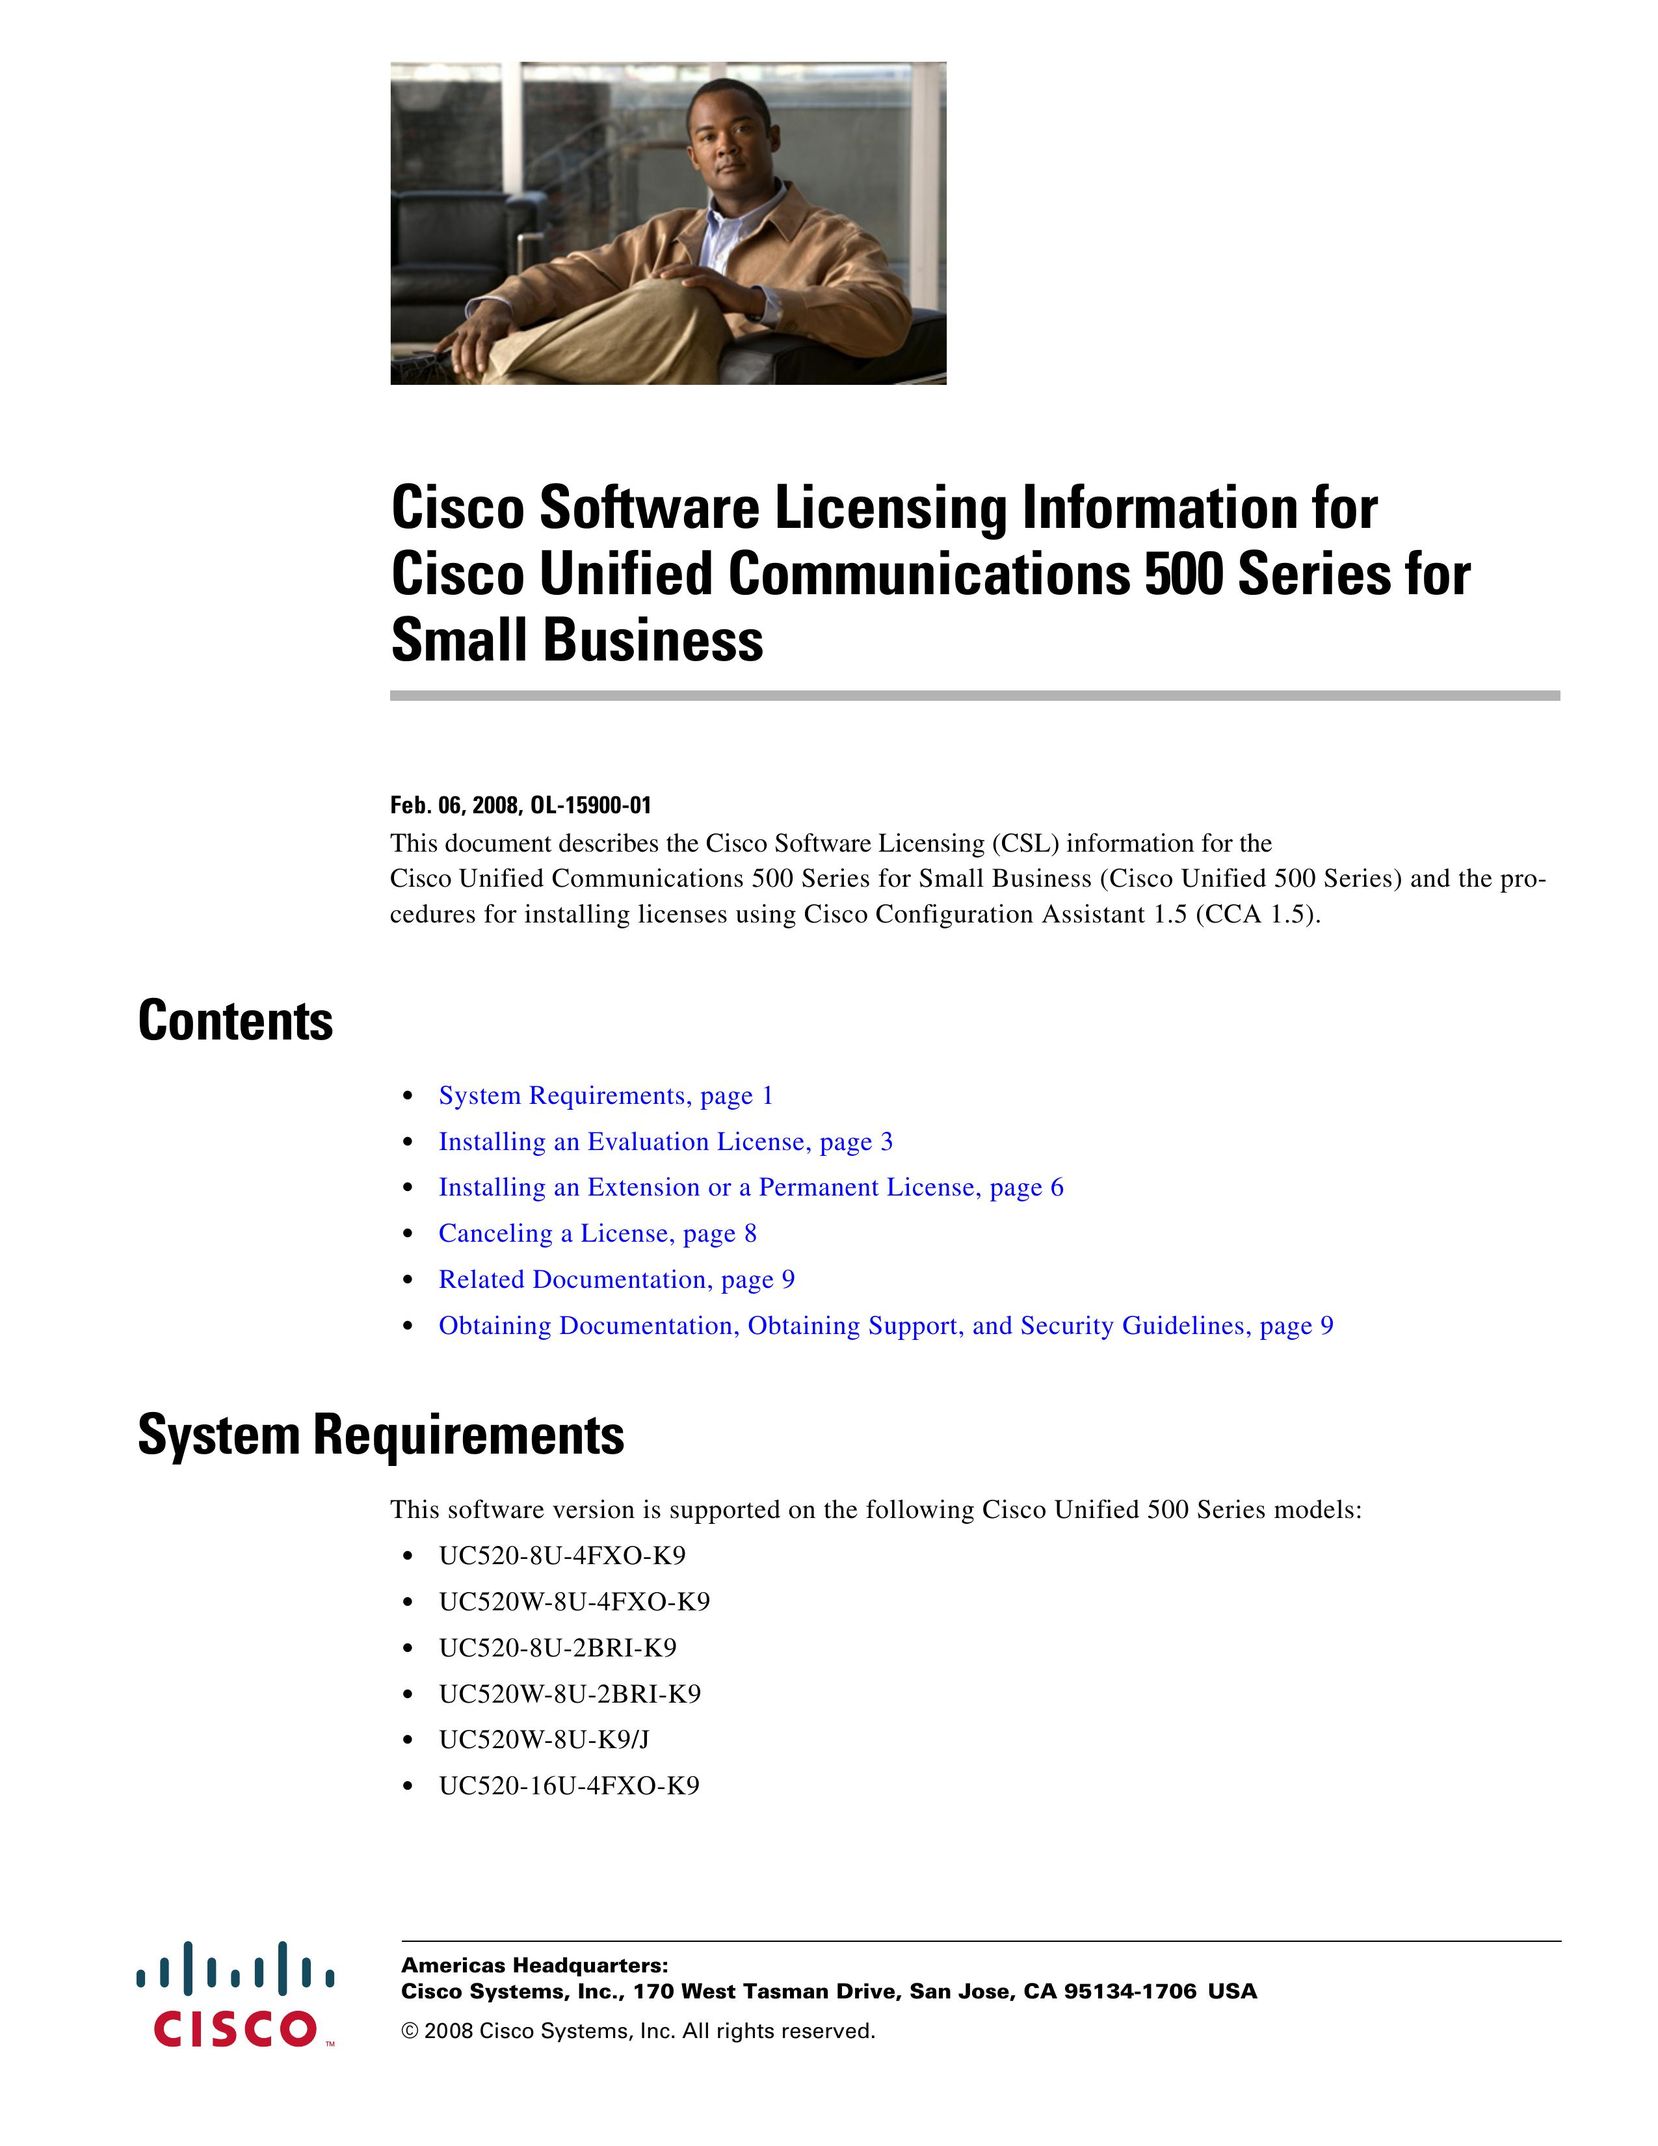 Cisco Systems UC52016U4FXOK9 Computer Hardware User Manual